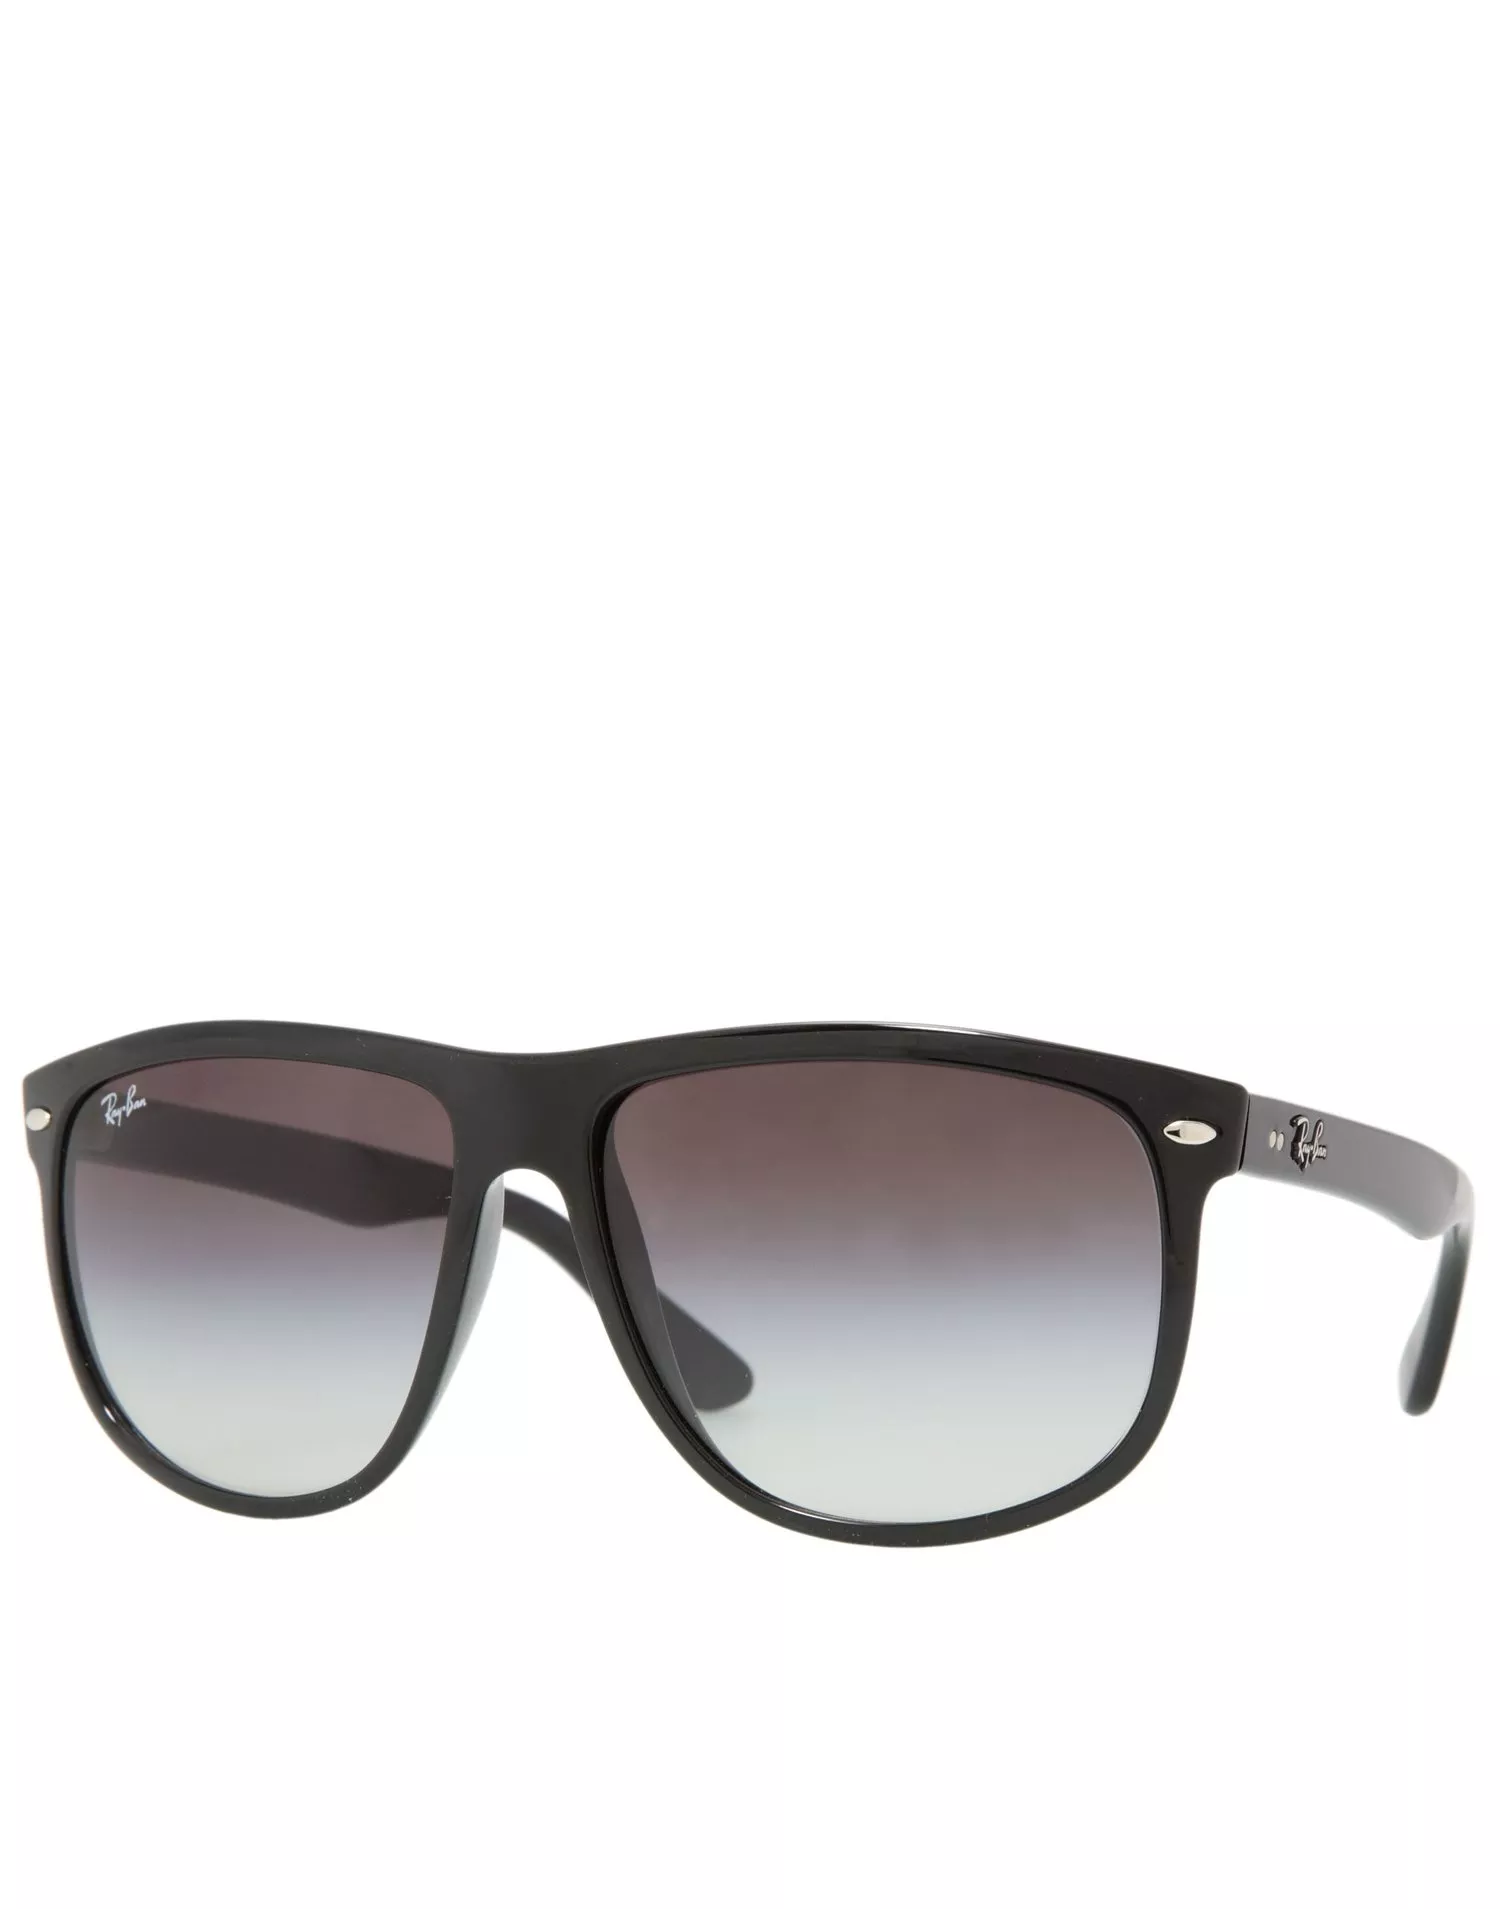 BOYFRIEND Sunglasses in Black and Grey - RB4147